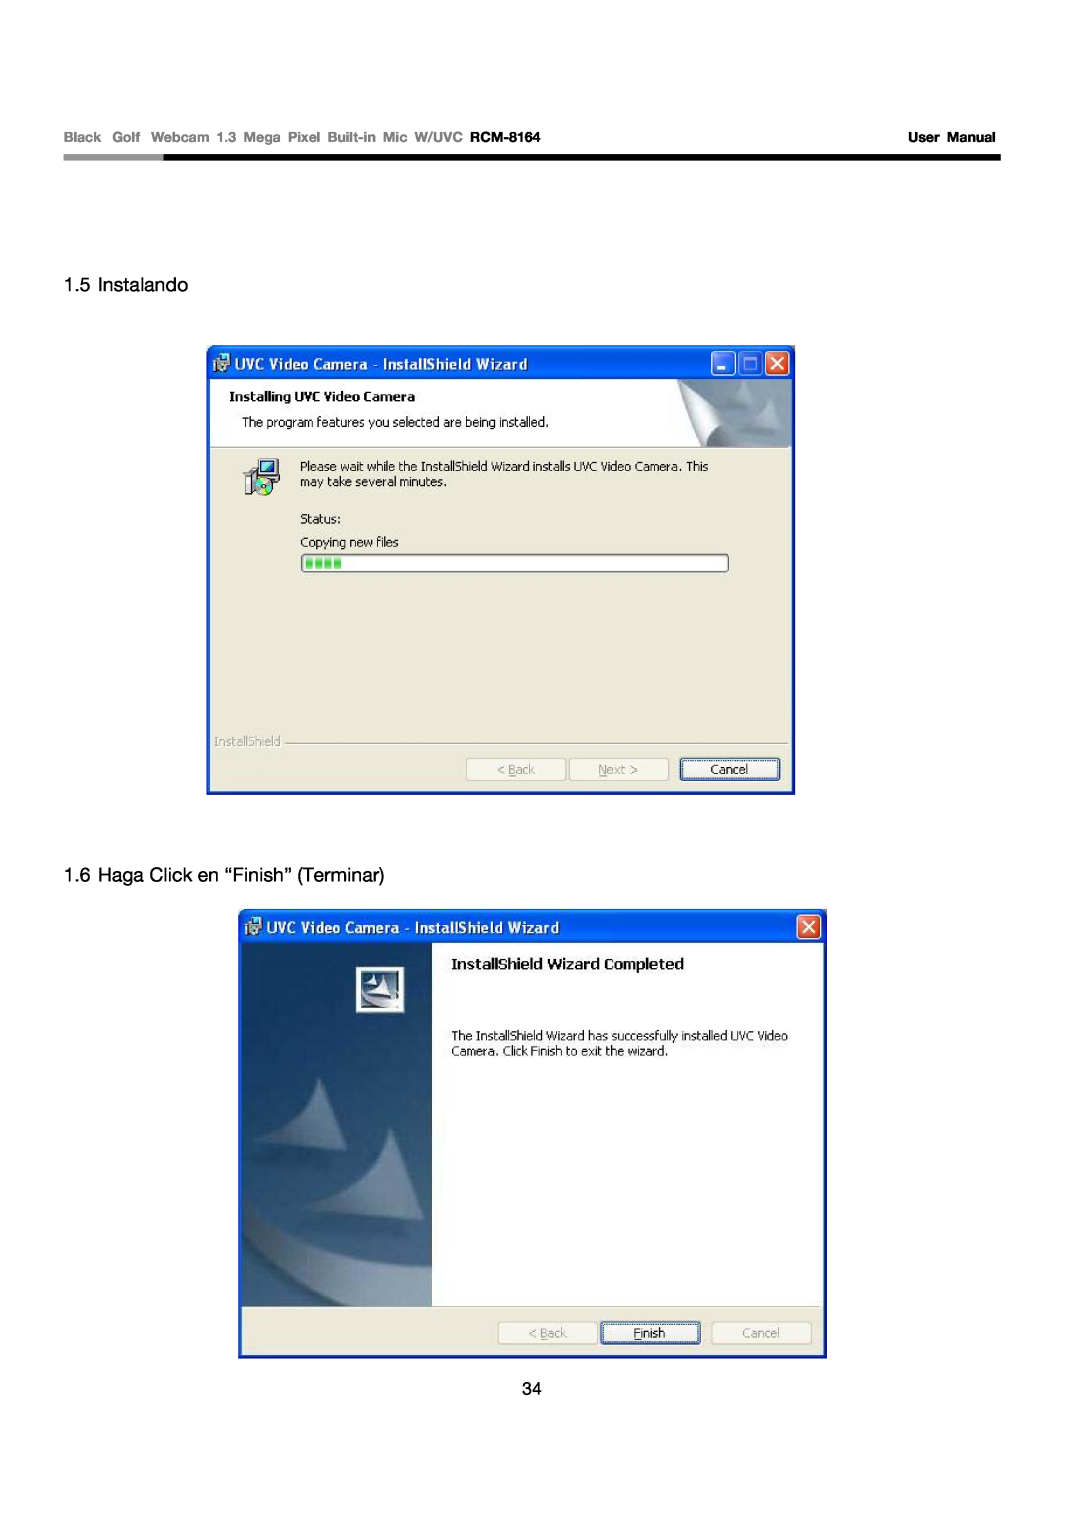 Rosewill RCM-8164 user manual Instalando 1.6 Haga Click en “Finish” Terminar, User Manual 